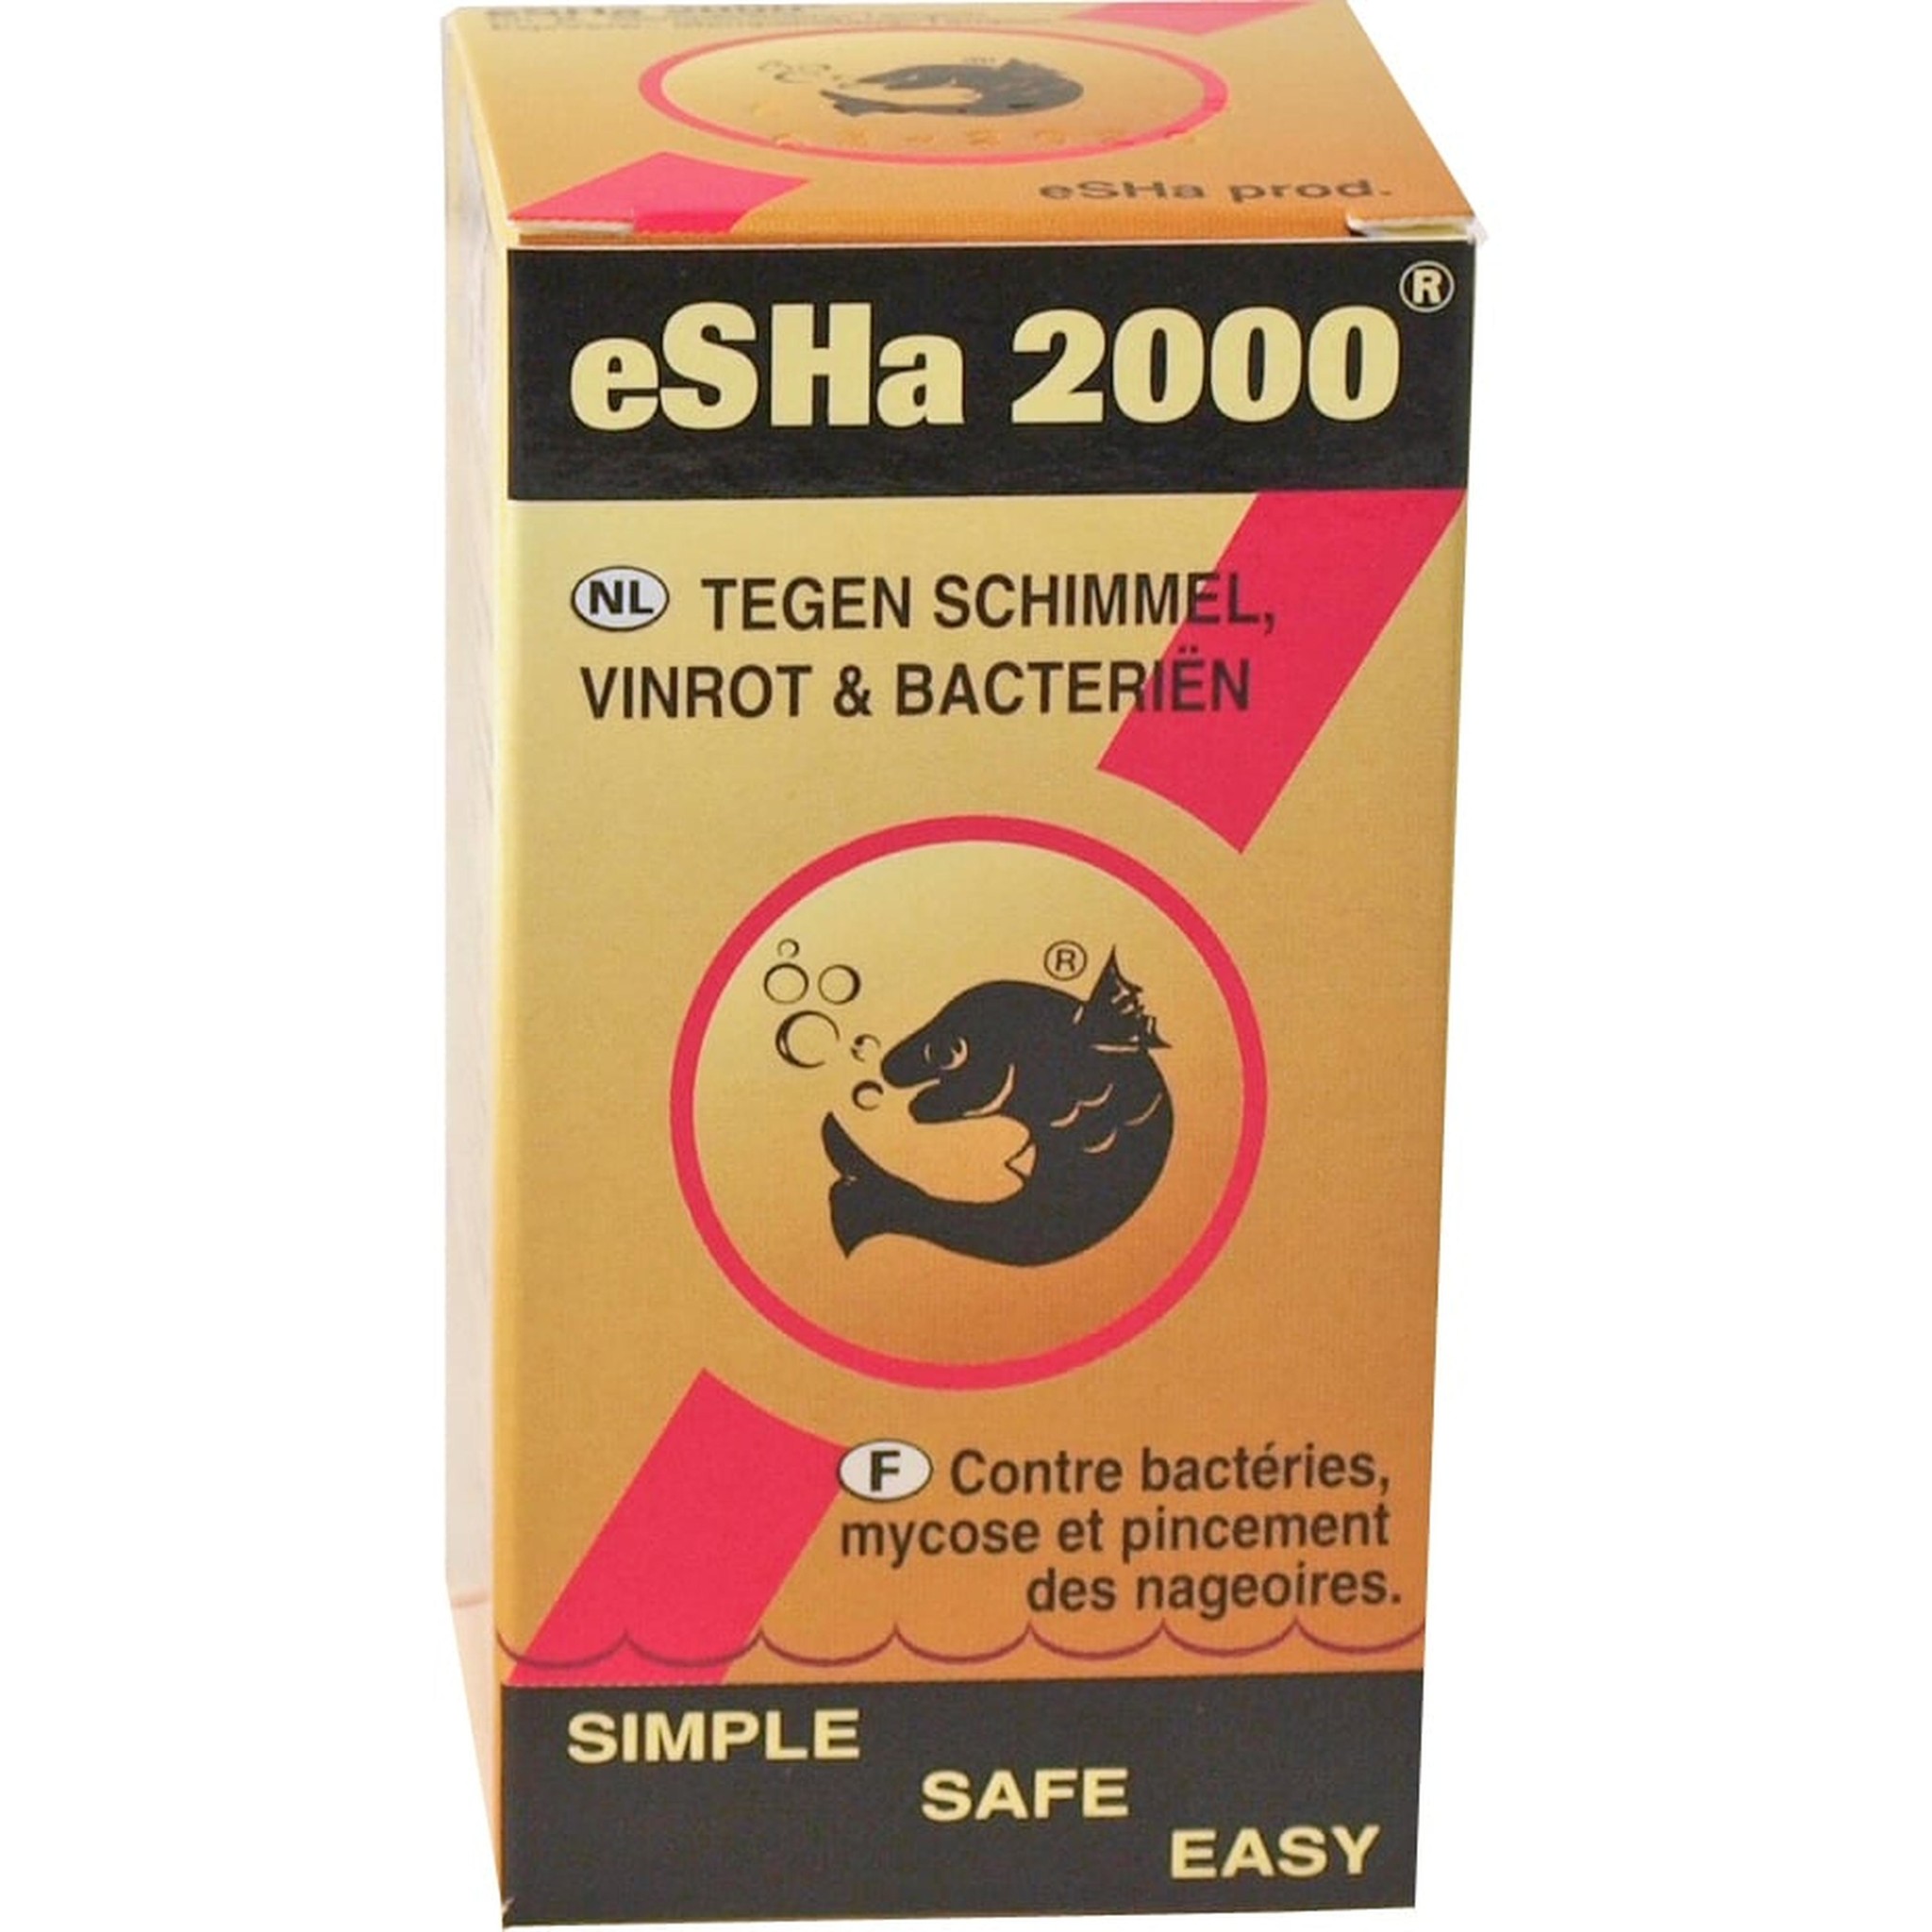 ESHA 2000 - 20 ml. - Aquarium Medicijn - Webwinkel voor vijver